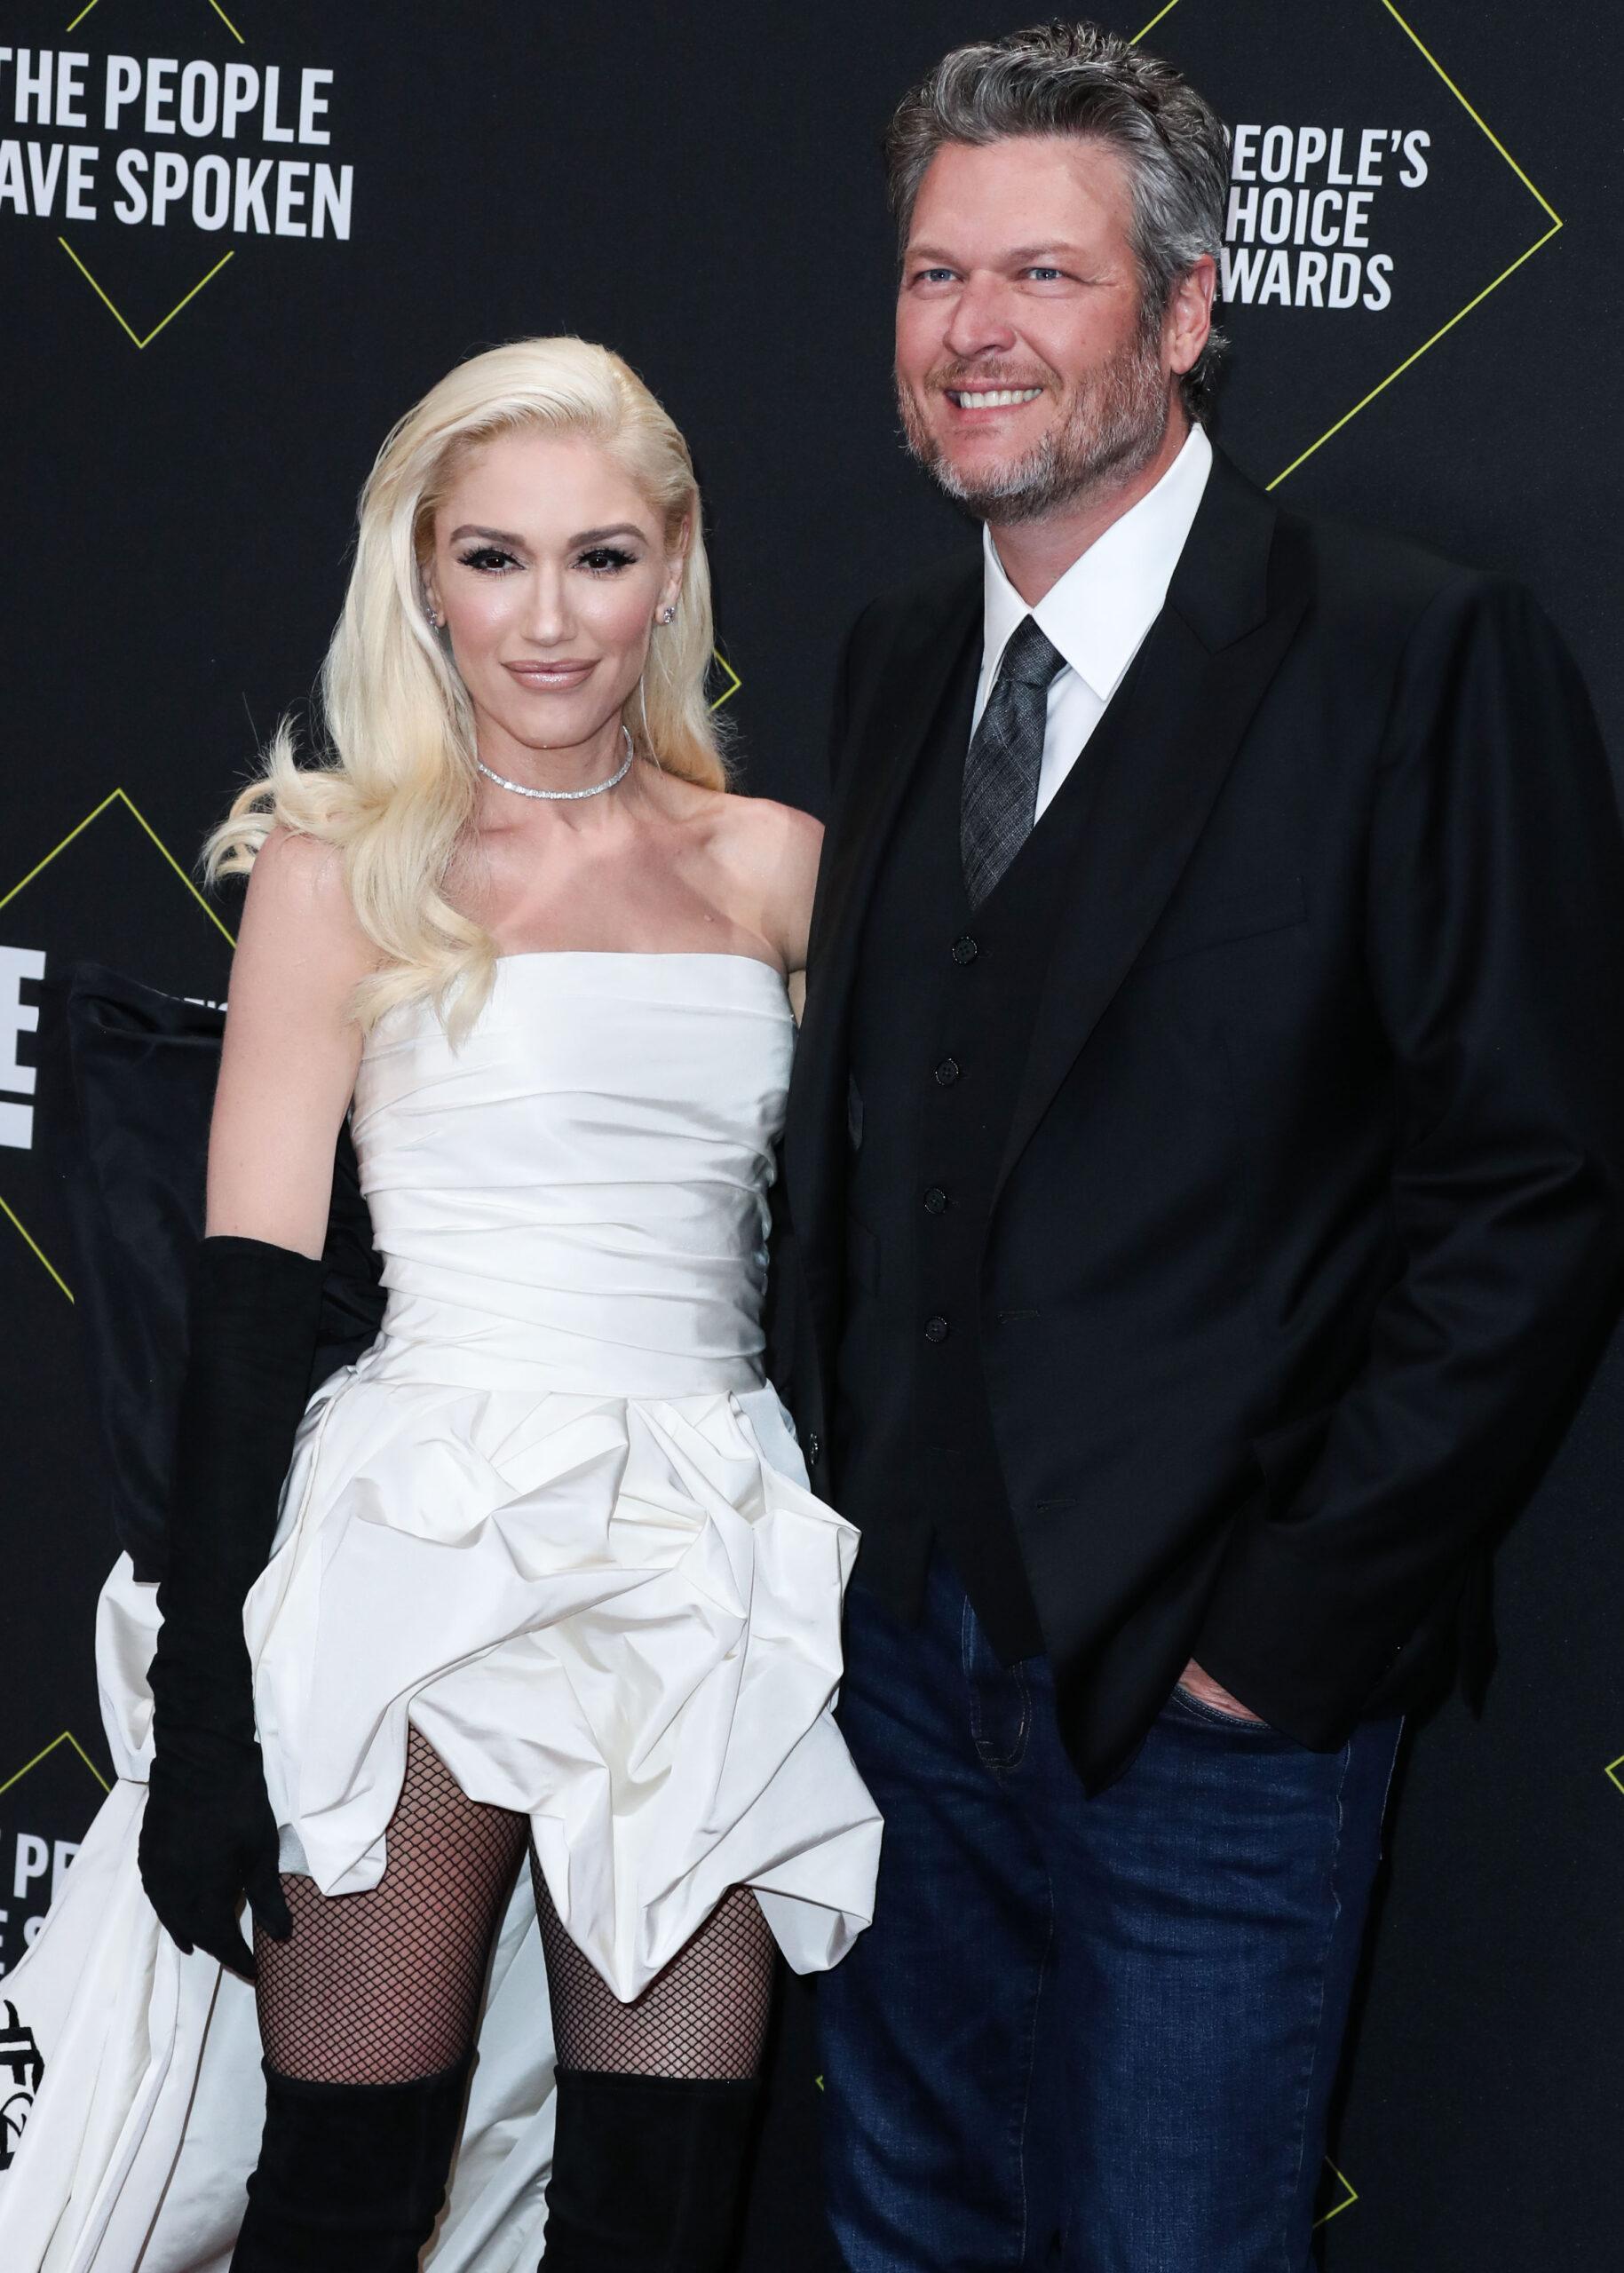 Gwen Stefani and partner Blake Shelton arrive at the 2019 E! People's Choice Awards